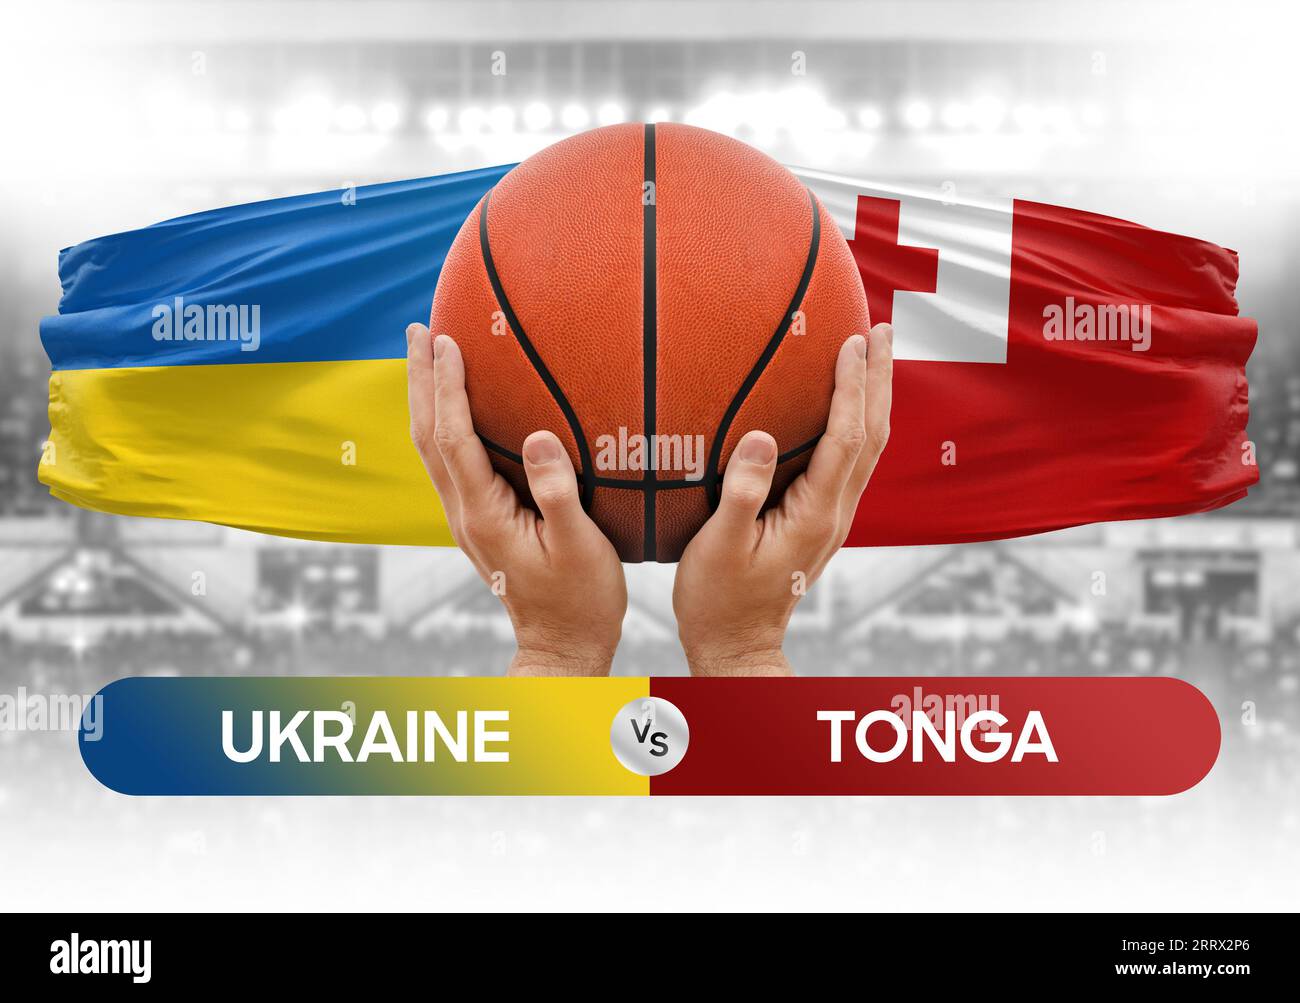 Ukraine vs Tonga Basketball-Nationalmannschaften Basketballspiel Wettbewerb Cup Konzept Bild Stockfoto